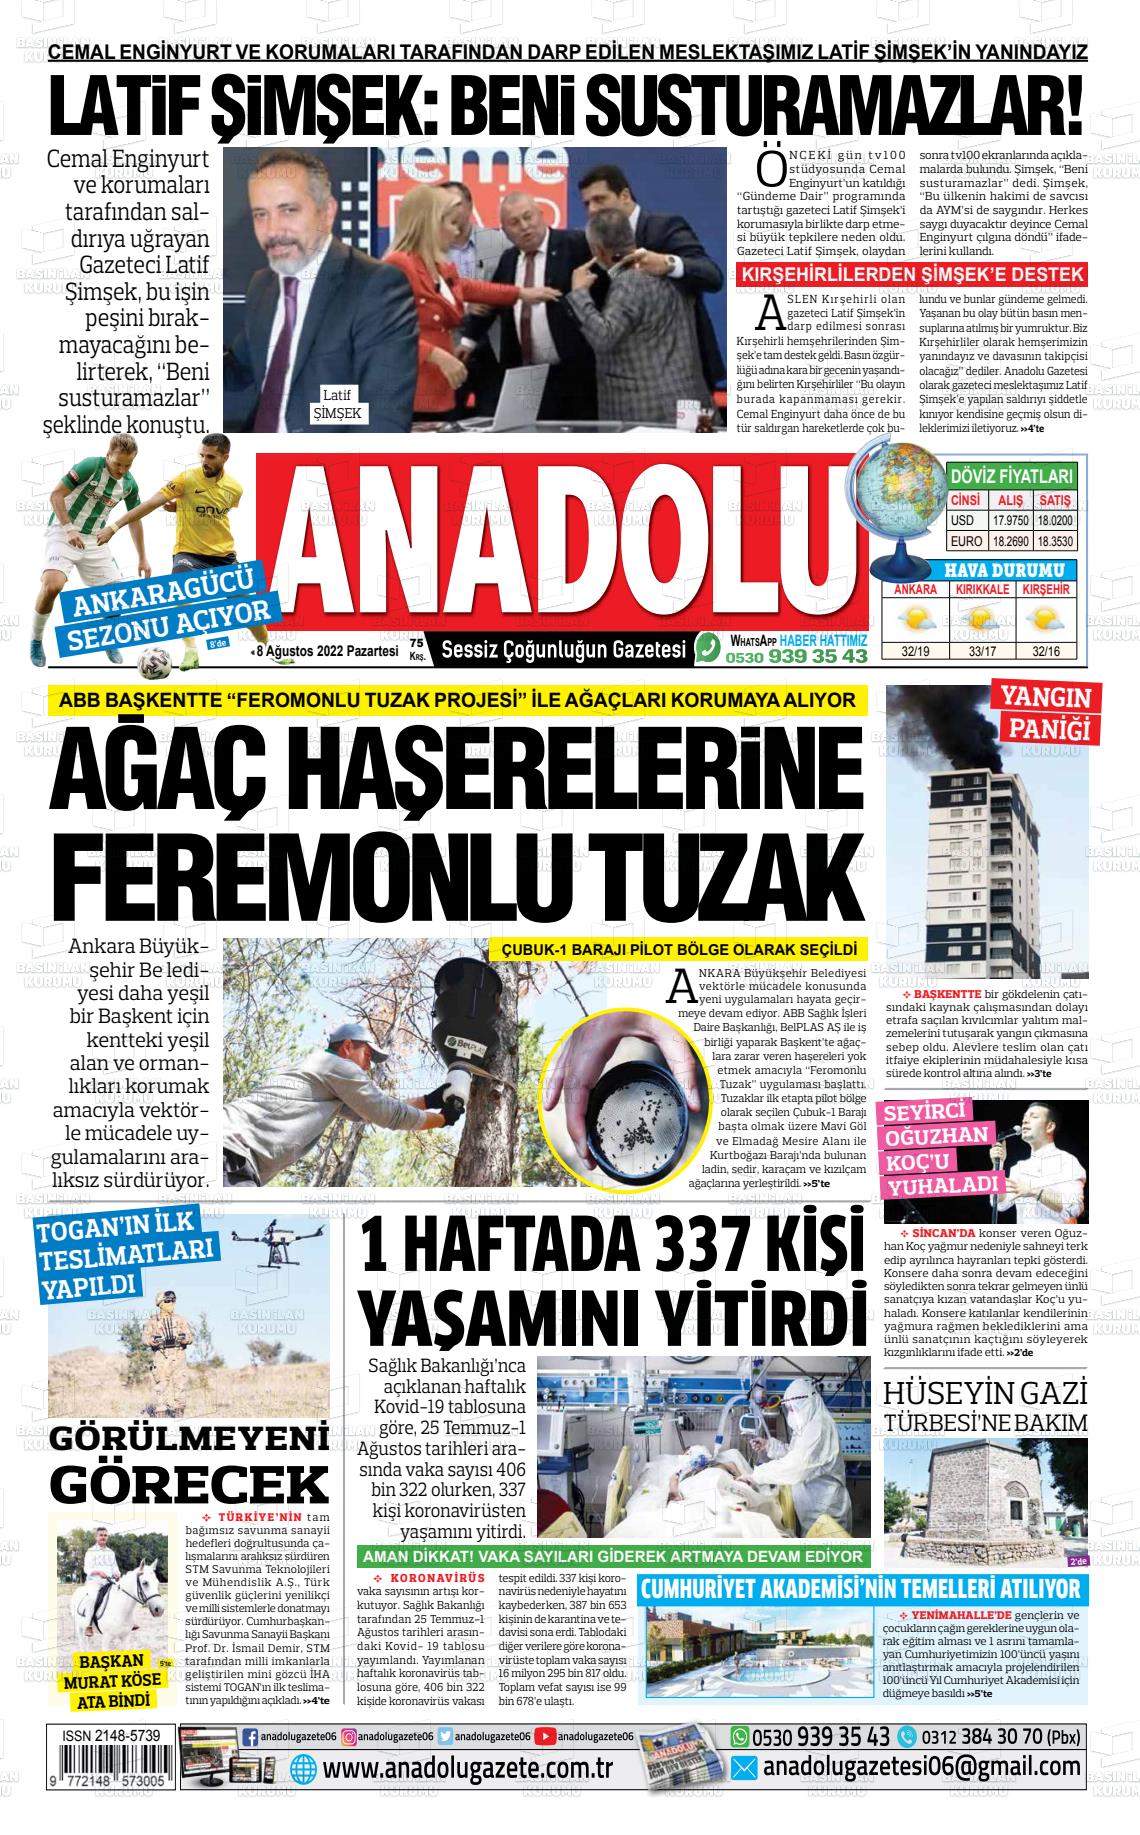 08 Ağustos 2022 Ankara Anadolu Gazete Manşeti